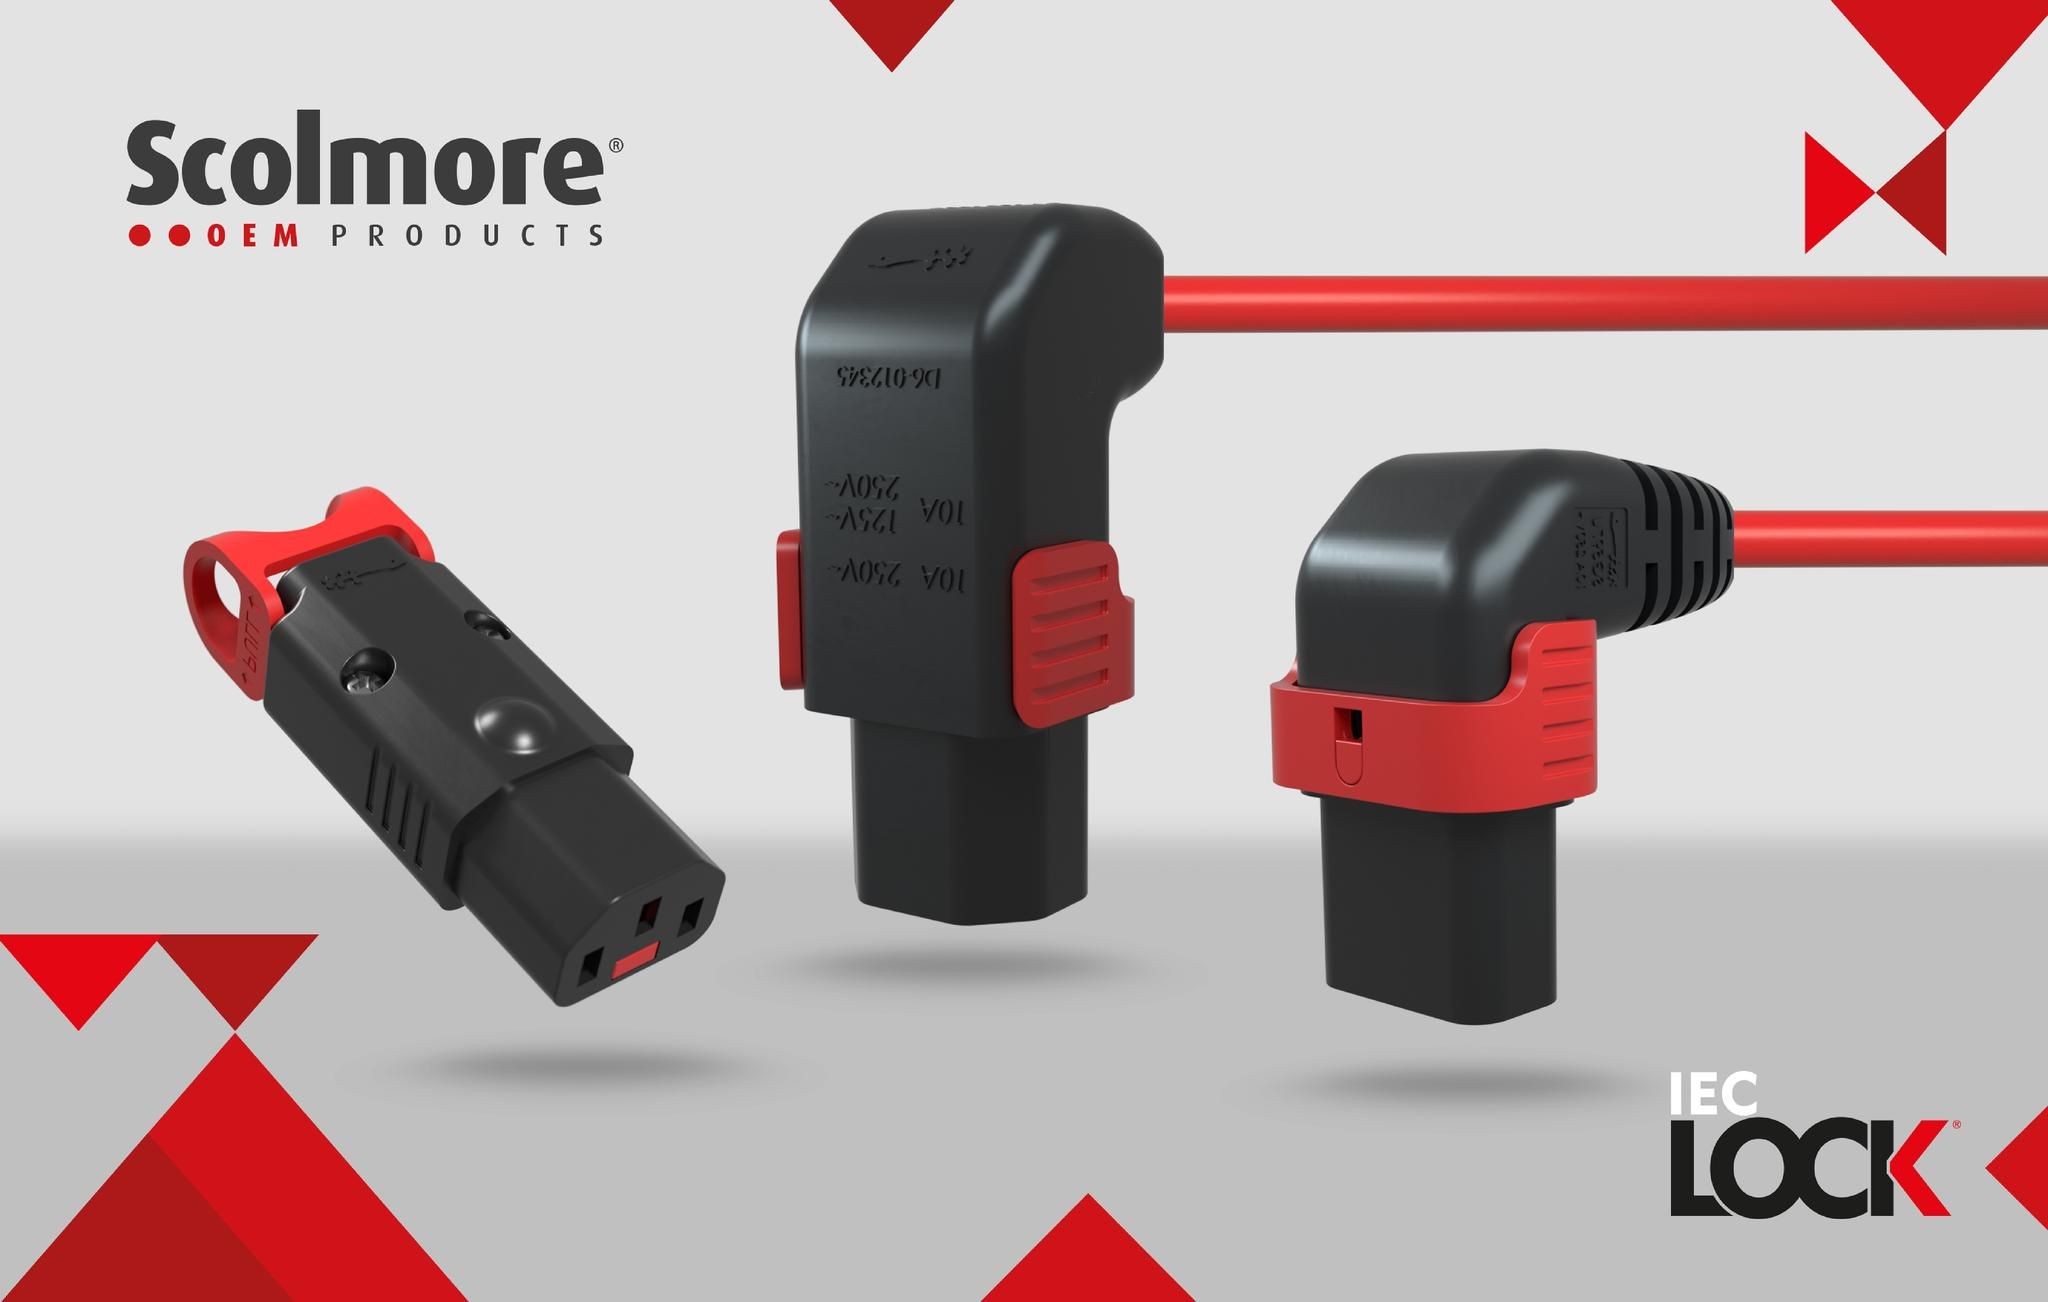 Scolmore expands IEC Lock™ range